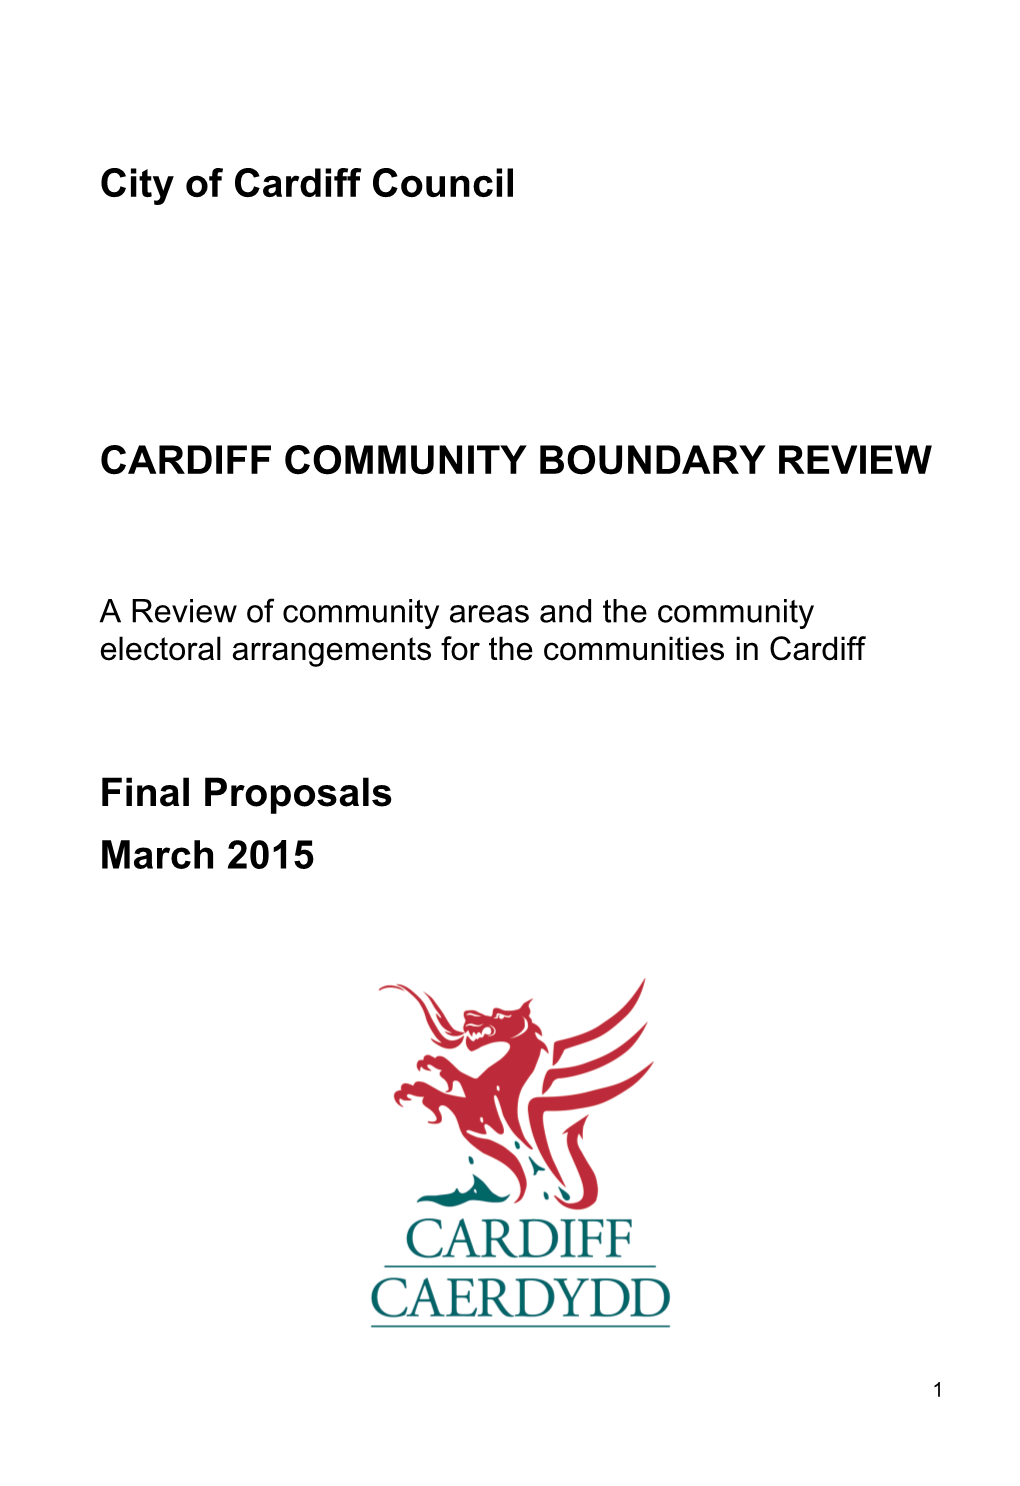 City of Cardiff Council CARDIFF COMMUNITY BOUNDARY